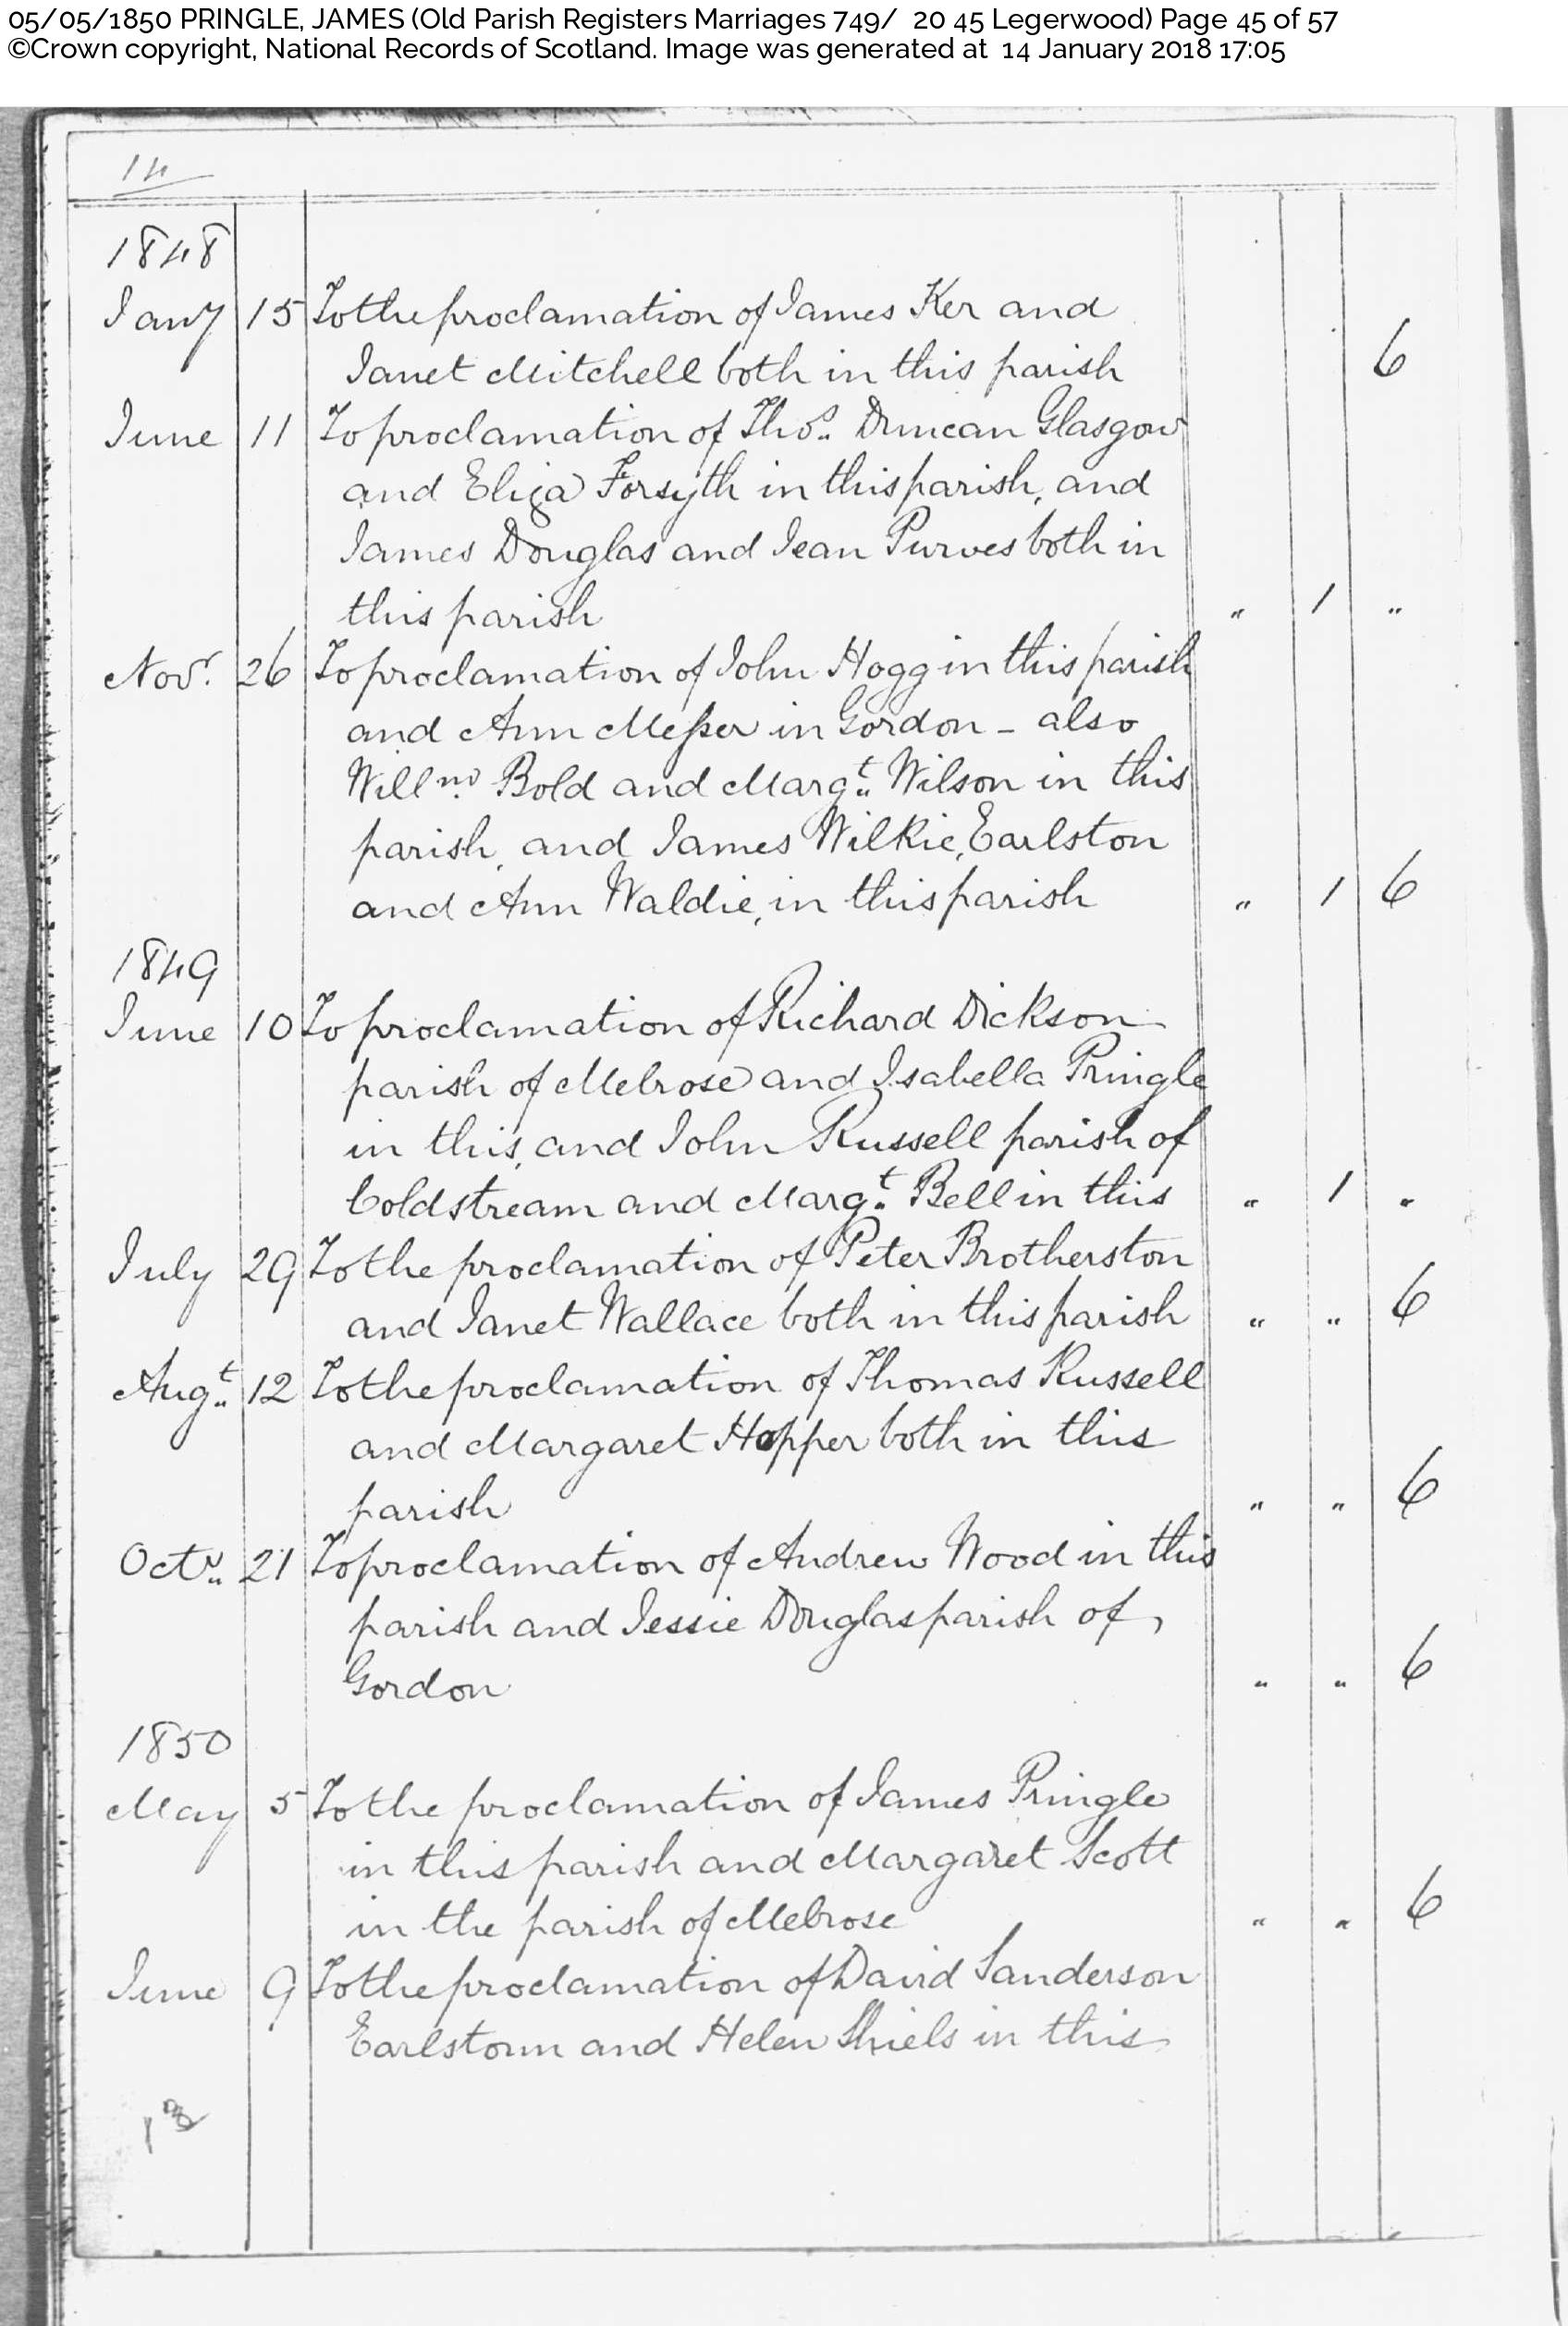 JamesPringleMargaretScott_M1850 Legerwood Berwickshire, May 5, 1850, Linked To: <a href='profiles/i4897.html' >Margaret Scott</a> and <a href='profiles/i437.html' >James Pringle 🧬</a>